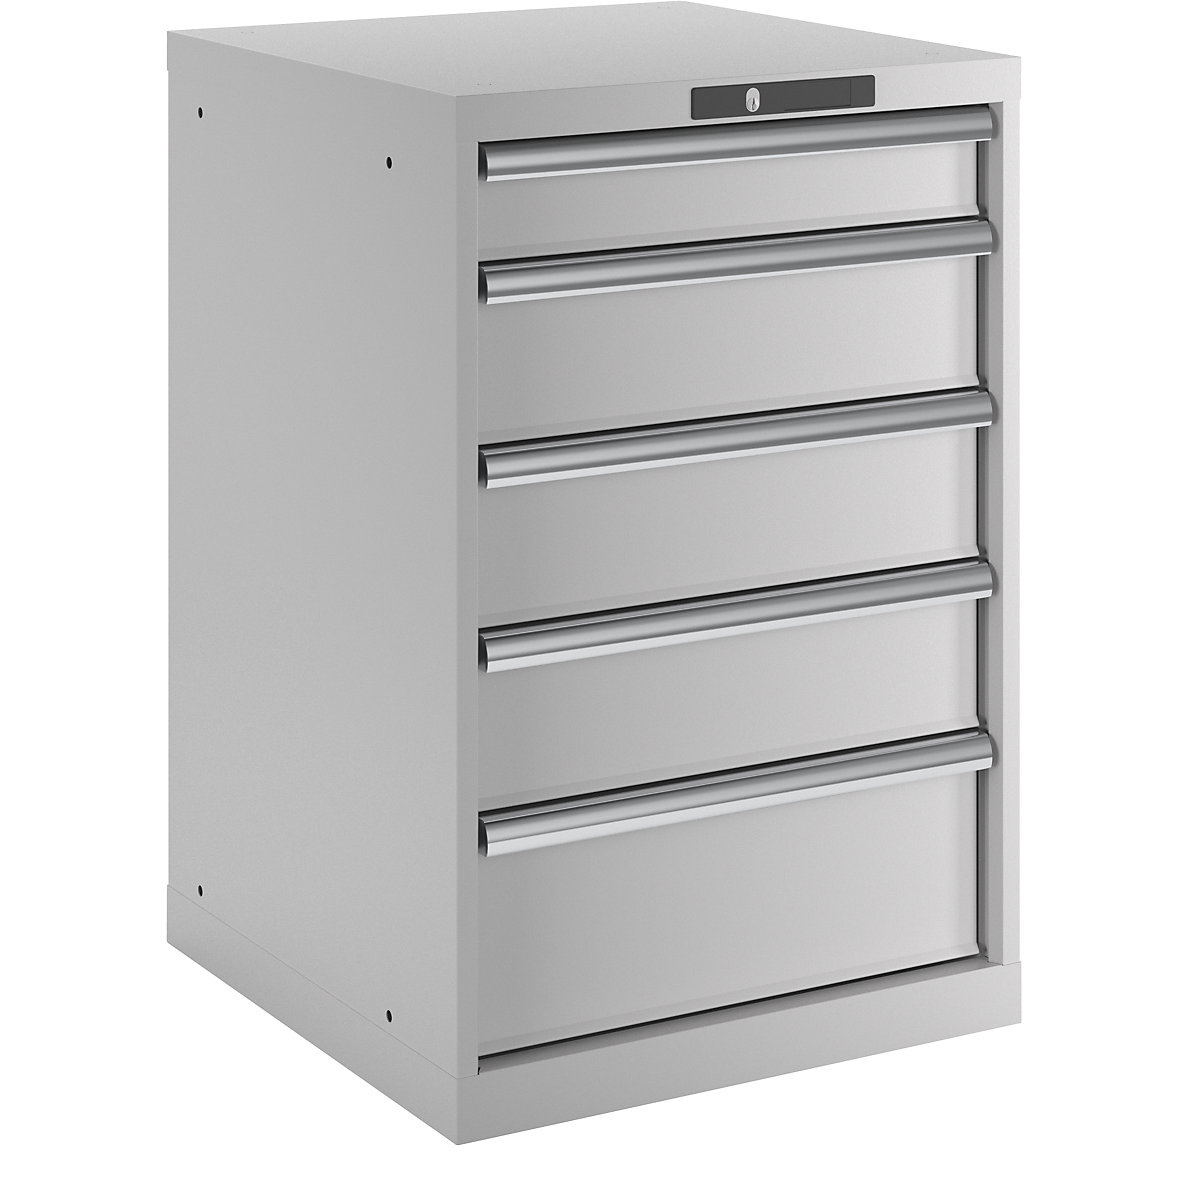 Drawer cupboard, 5 drawers – LISTA, WxDxH 564 x 572 x 850 mm, light grey-2